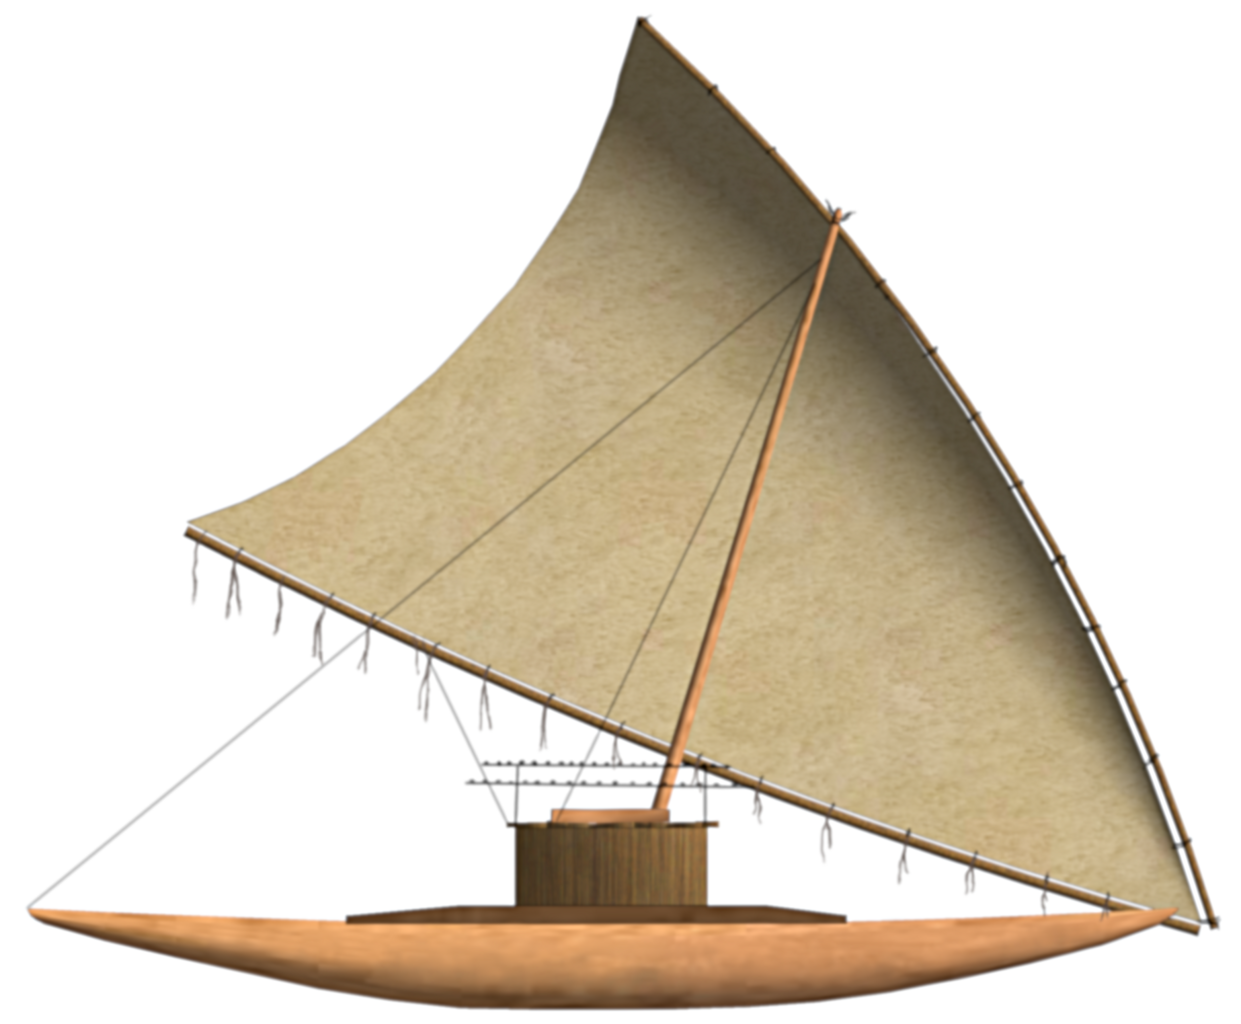 File:Kalia Tongan sailing craft.png - Wikipedia